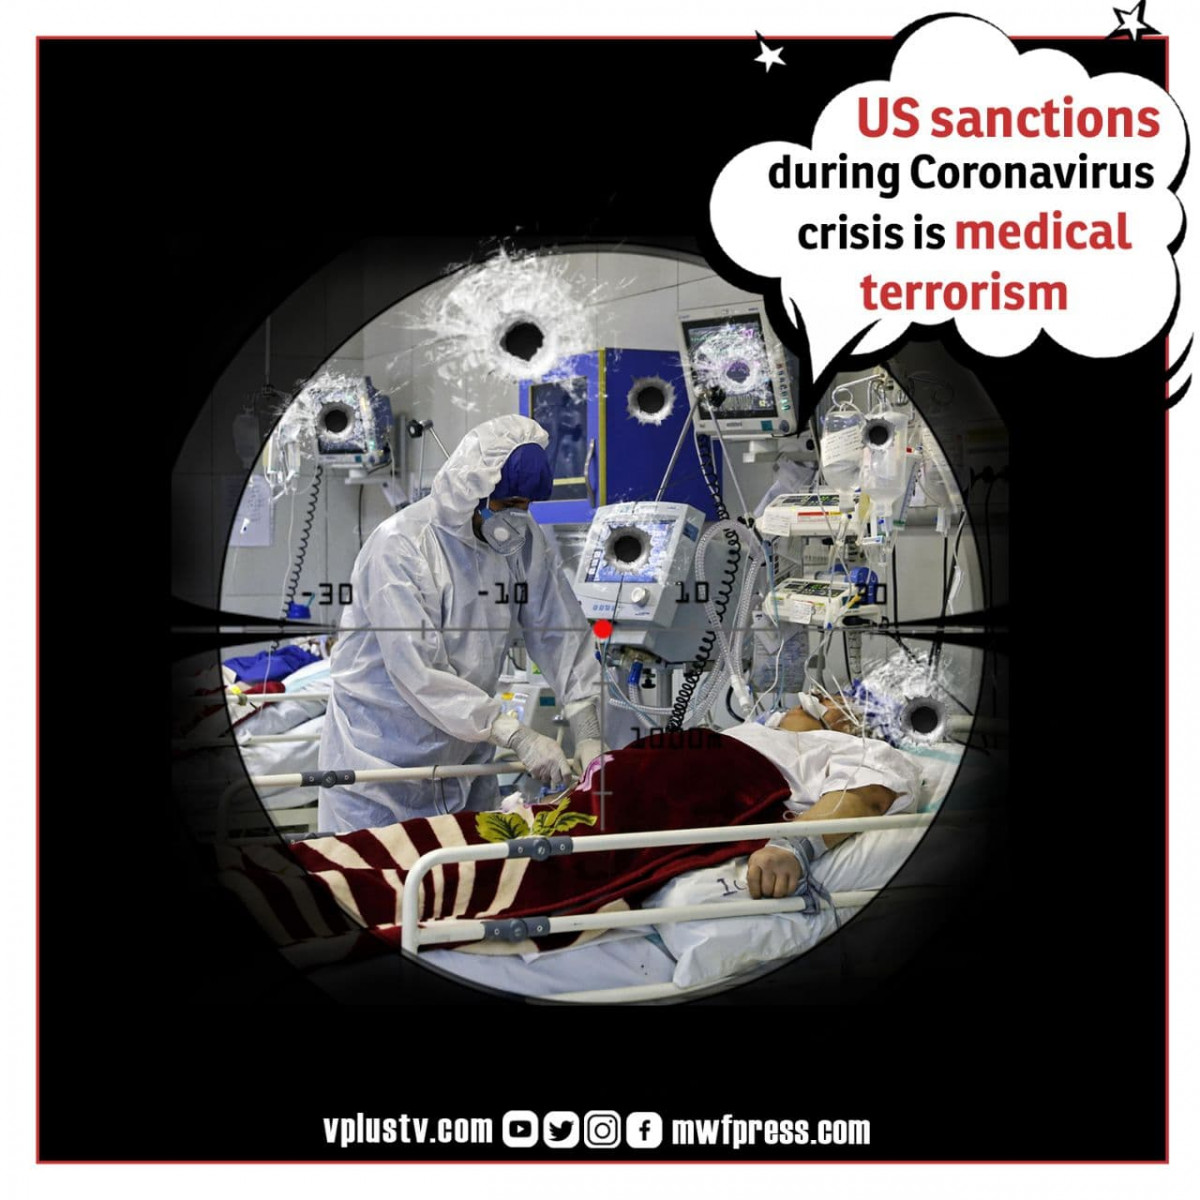 US sanctions during Coronavirus crisis is medical terrorism